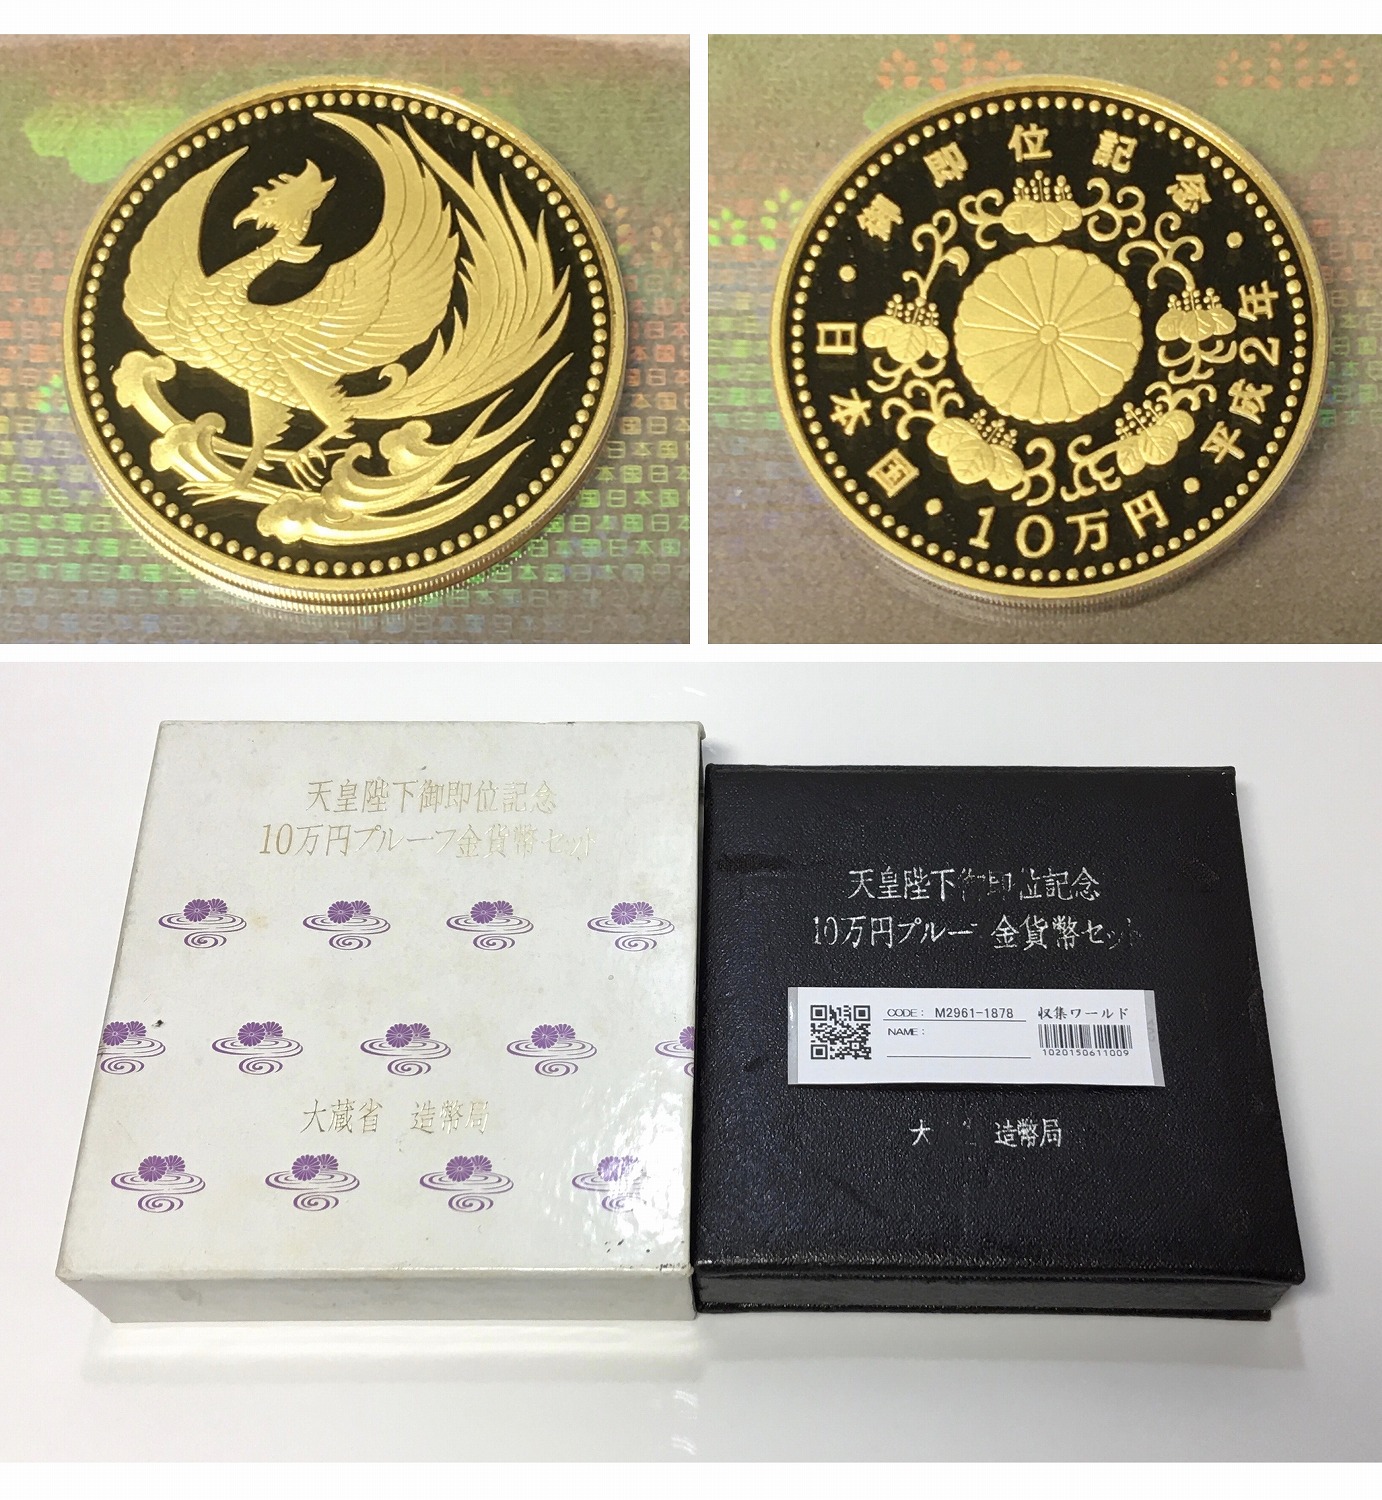 天皇陛下御即位記念 10万円プルーフ金貨 1991年 純金30g 完未品 | 収集 